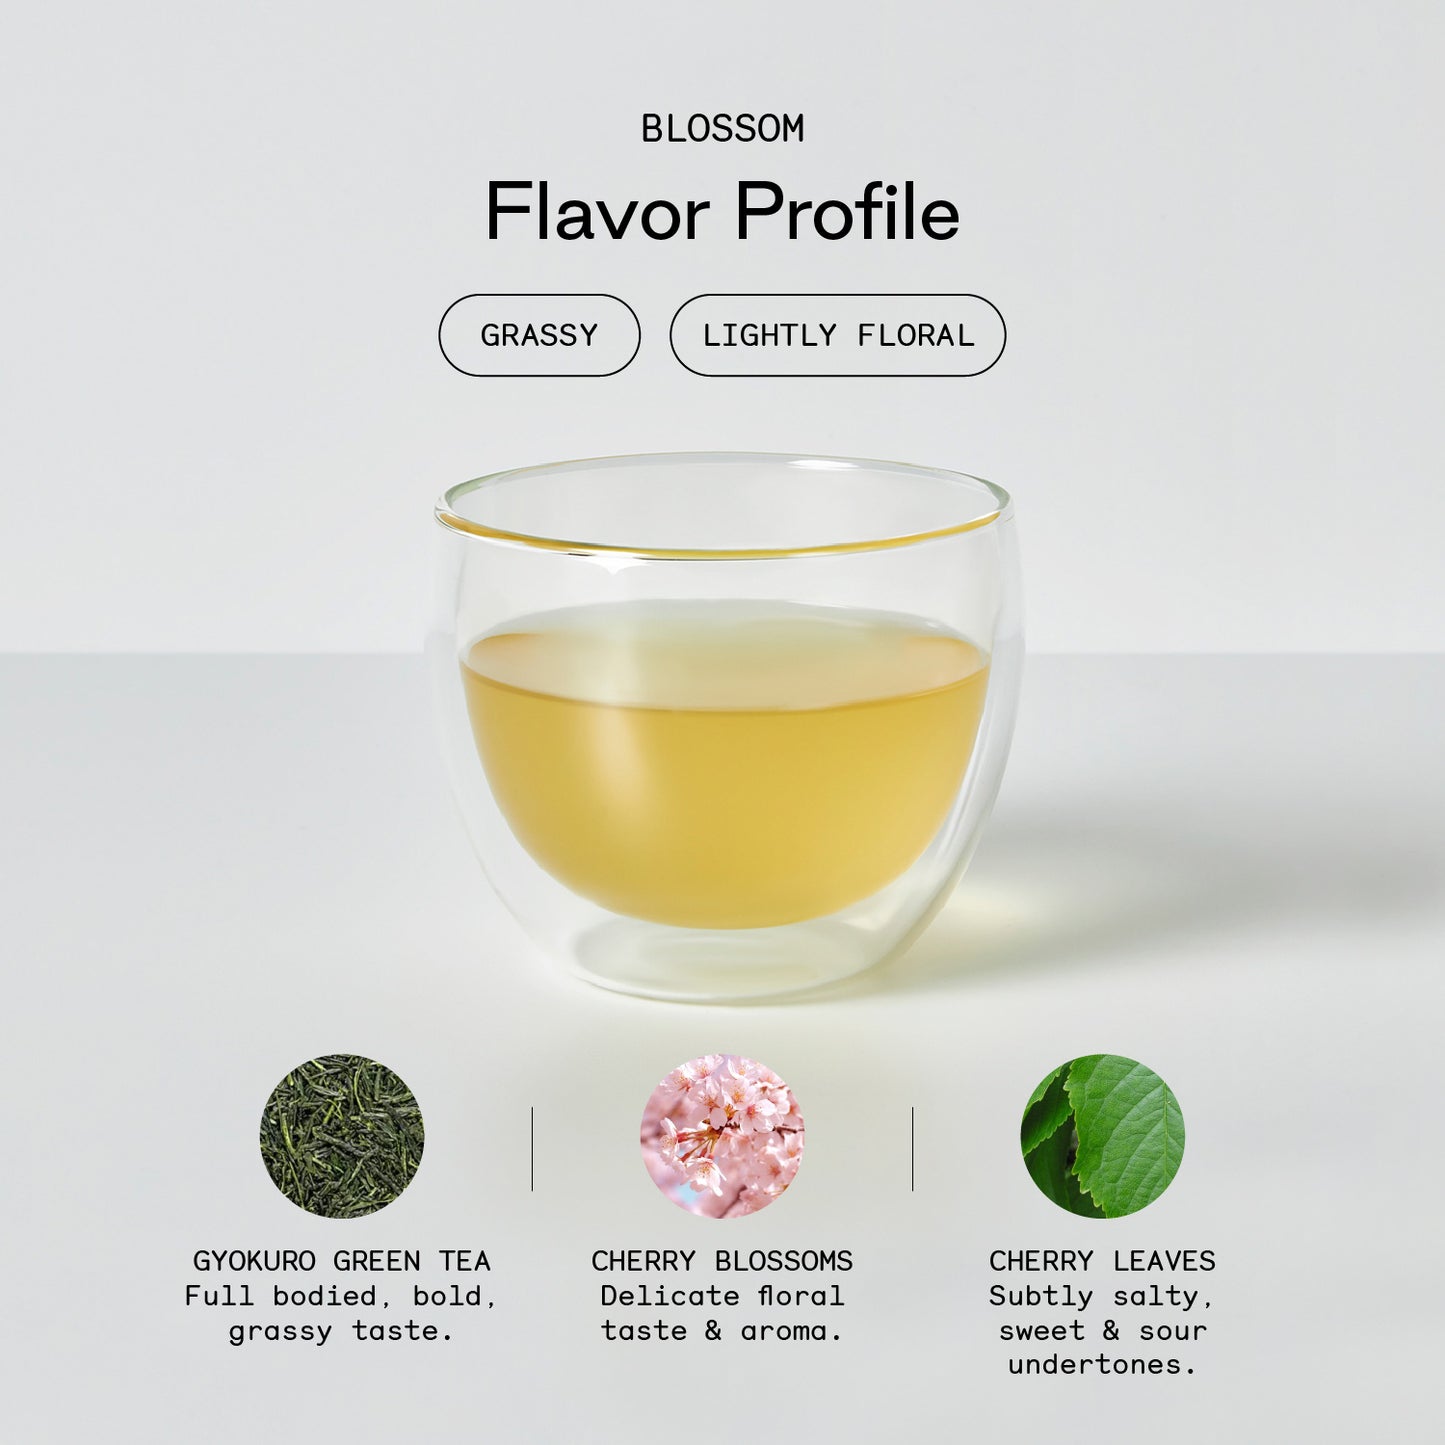 Drinks, Indonesian Green Tea: Nü vs Sosro Joy Tea